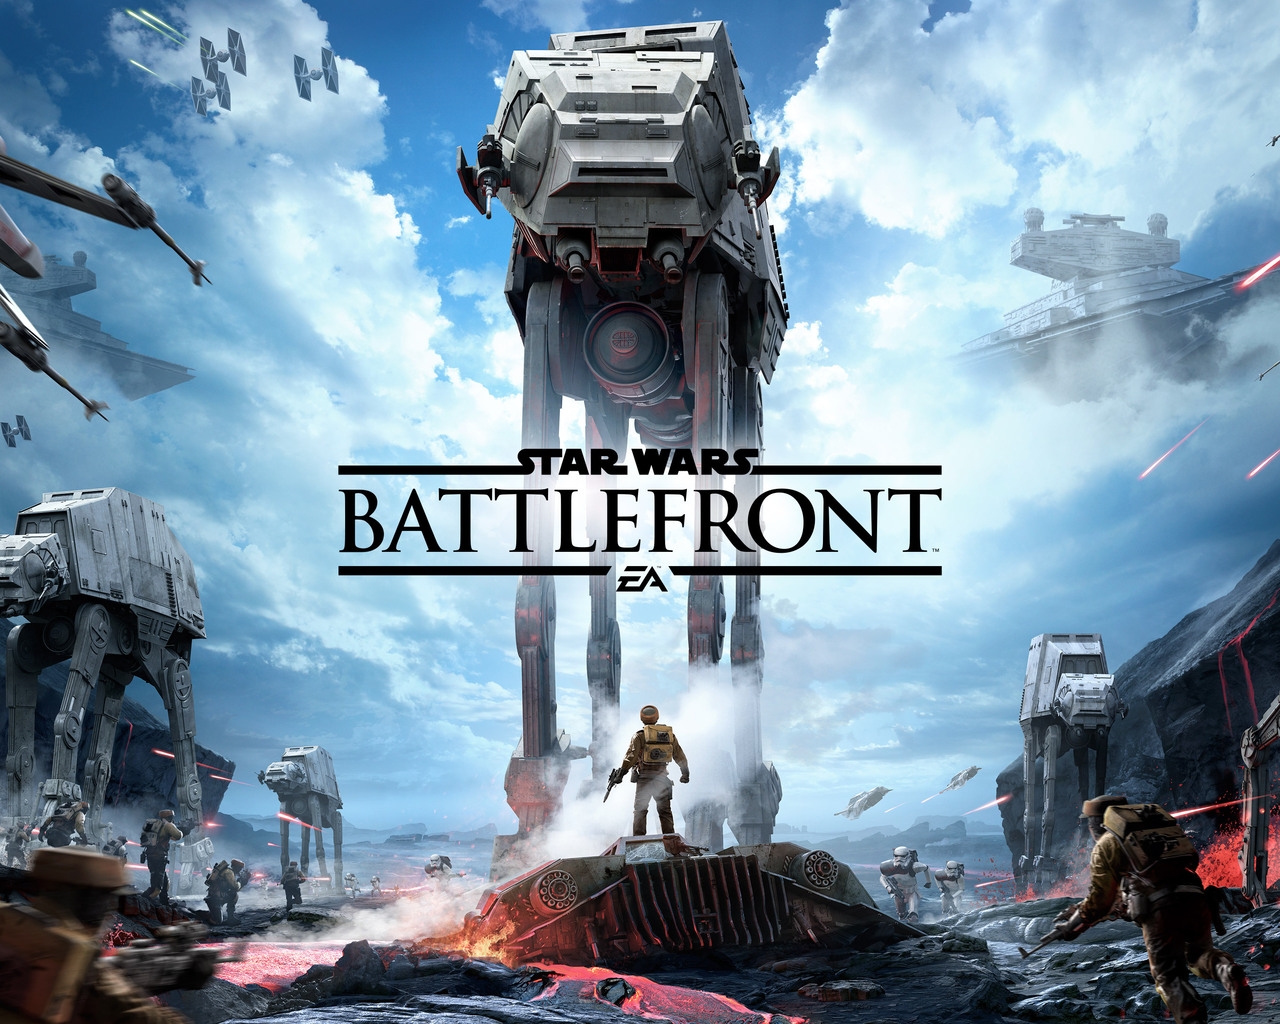 Star Wars Battlefront Poster for 1280 x 1024 resolution